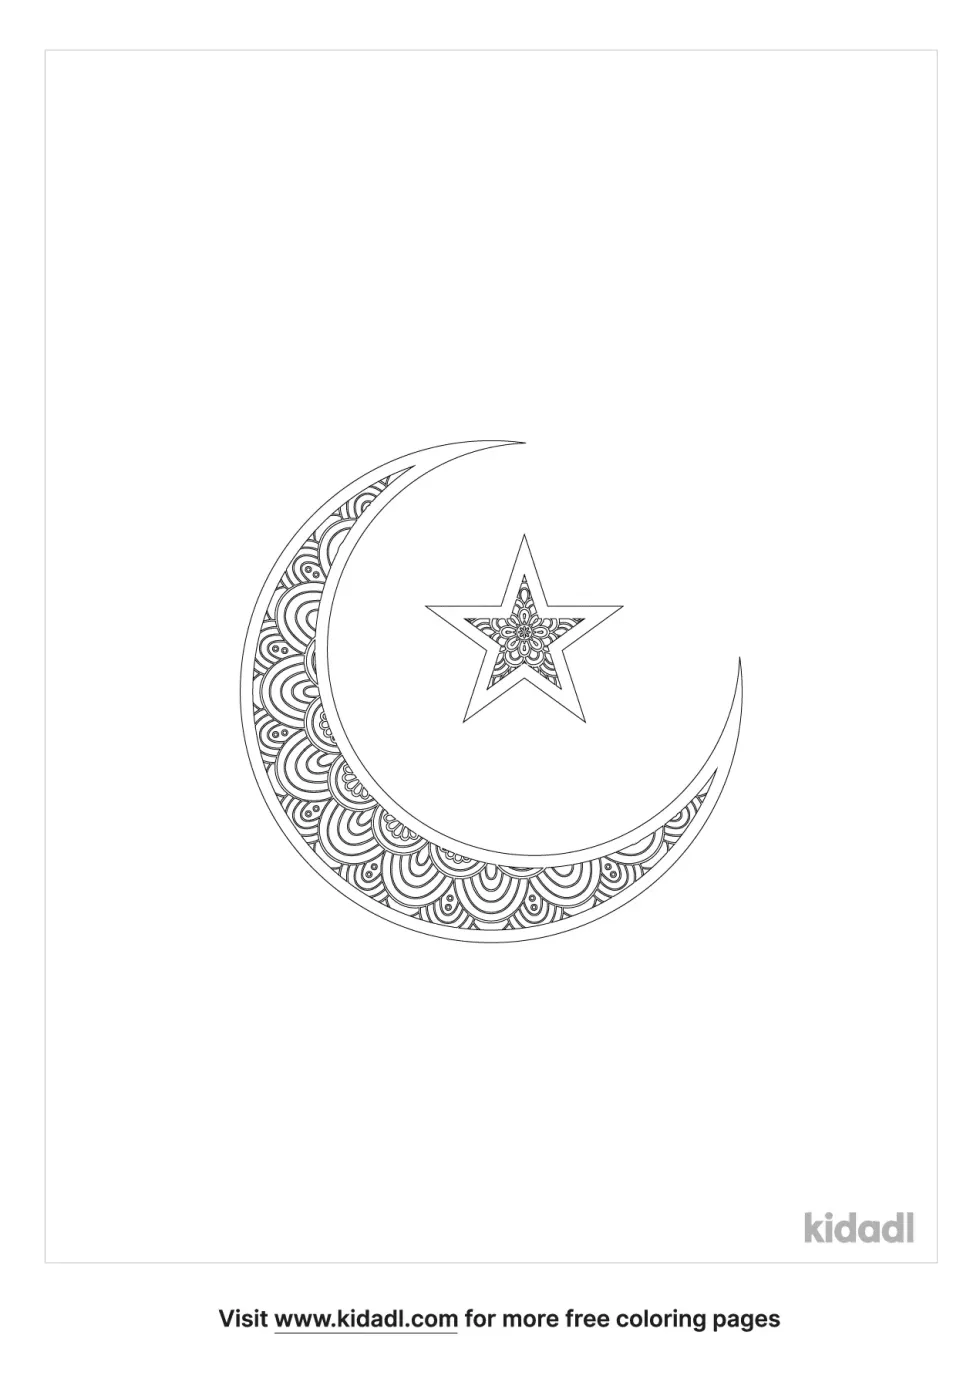 Islam Star And Crescent